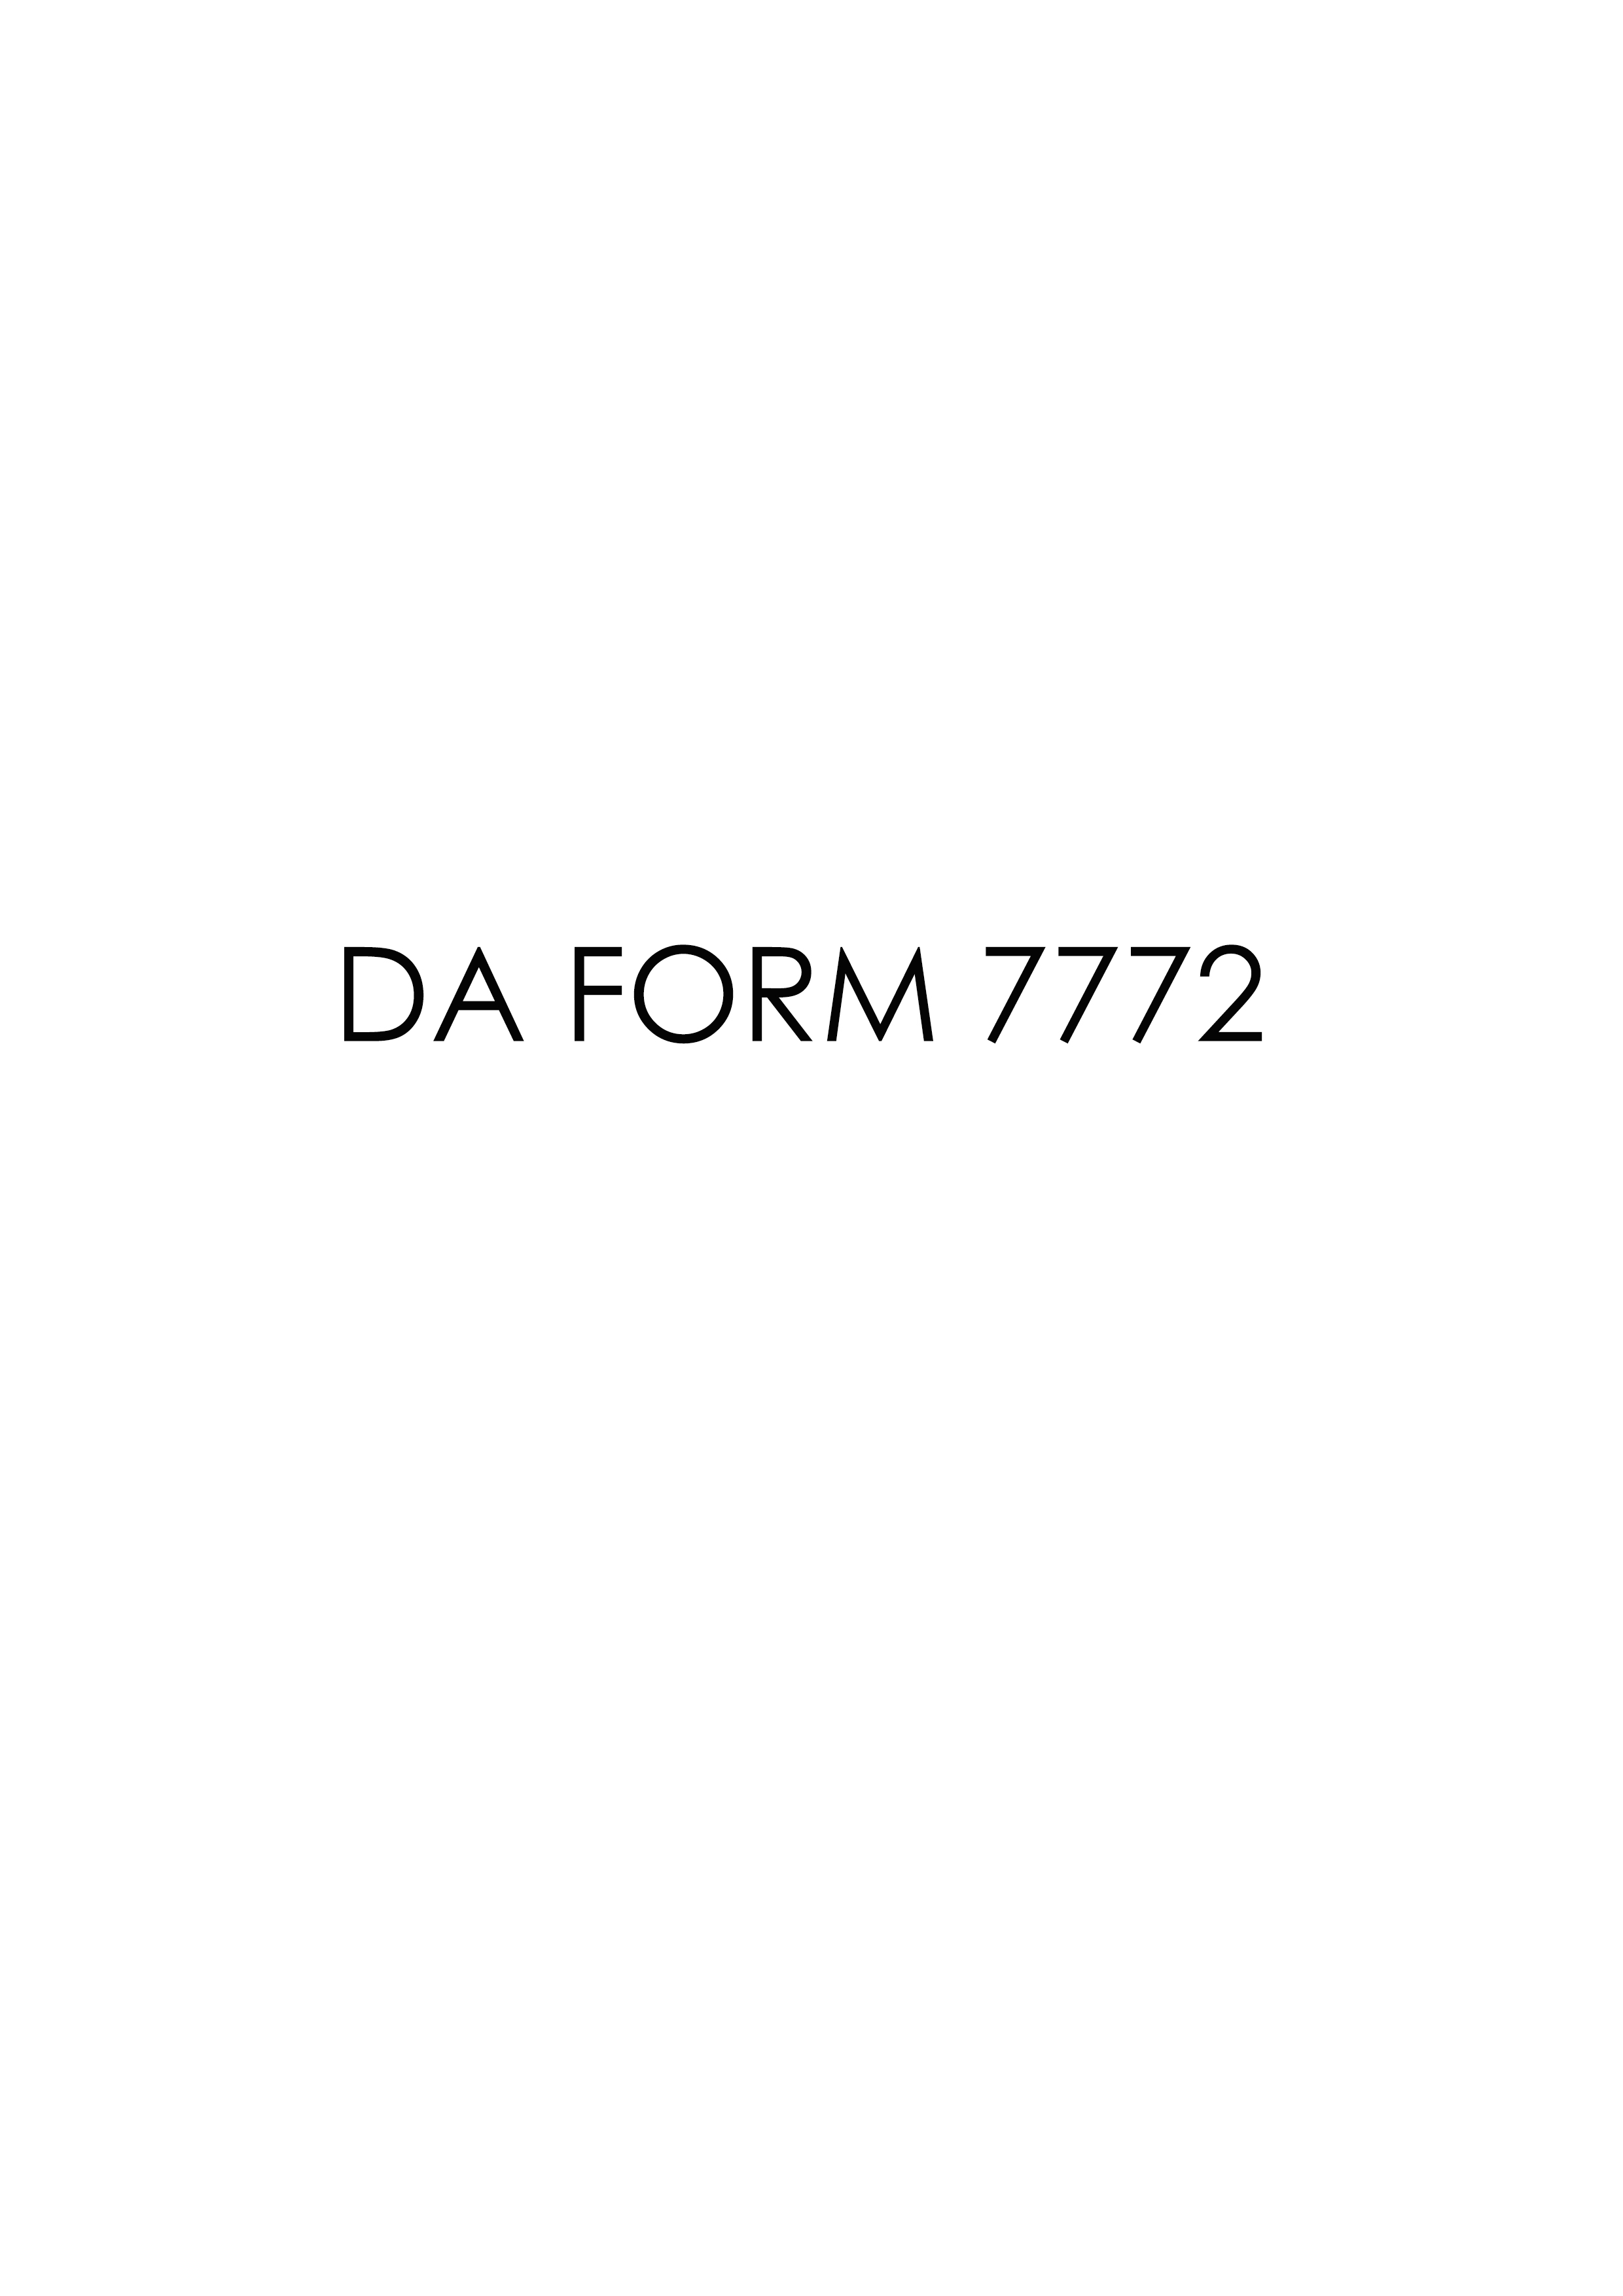 Download da form 7772